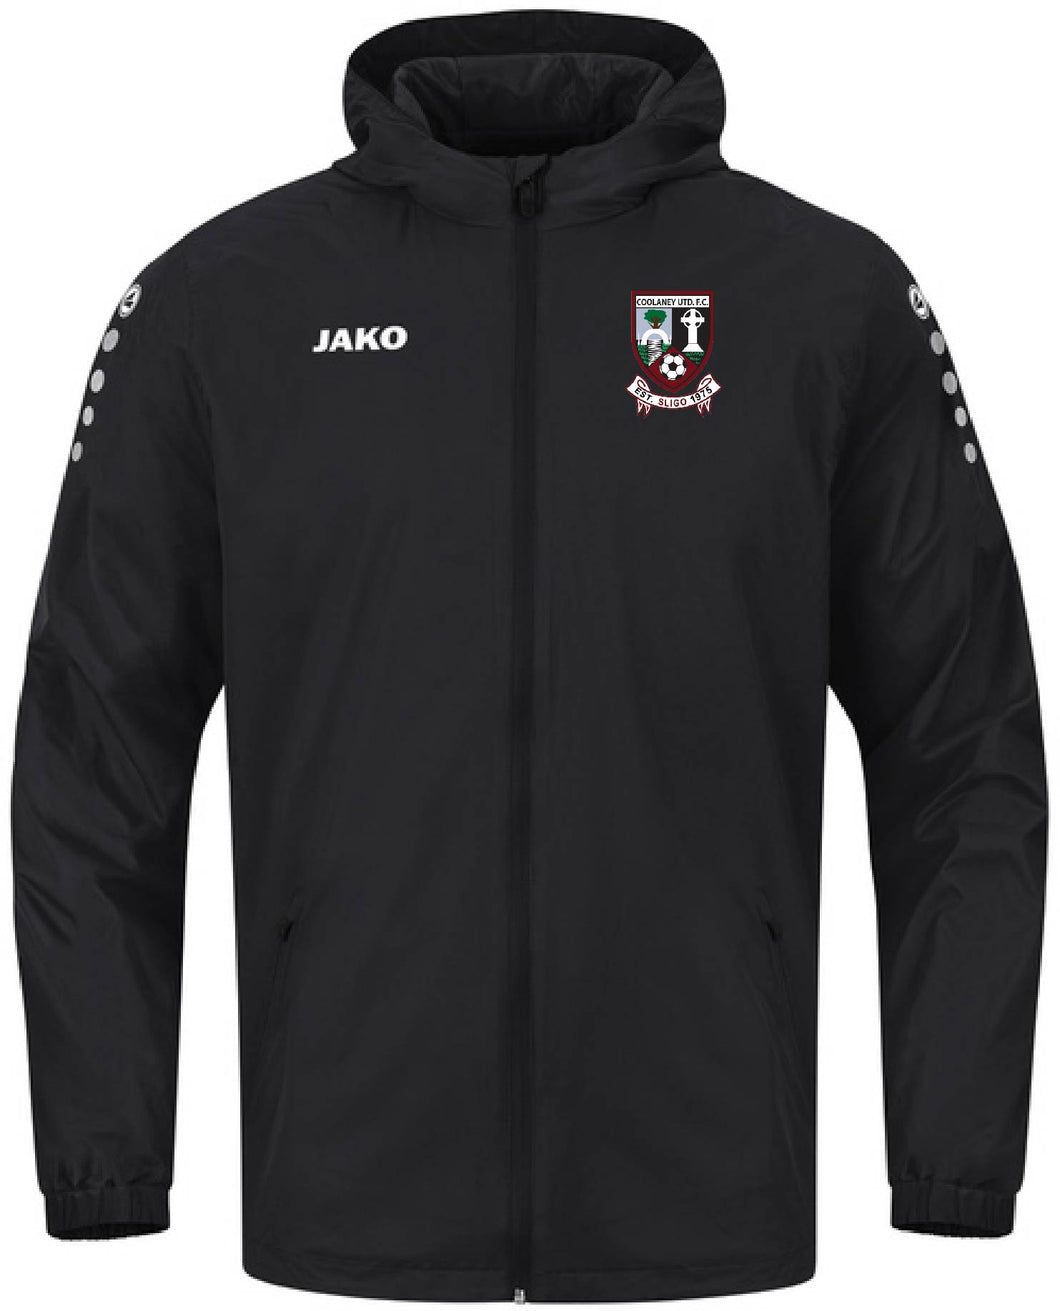 Kids JAKO Coolaney UTD FC Rain Jacket 7402CL-K